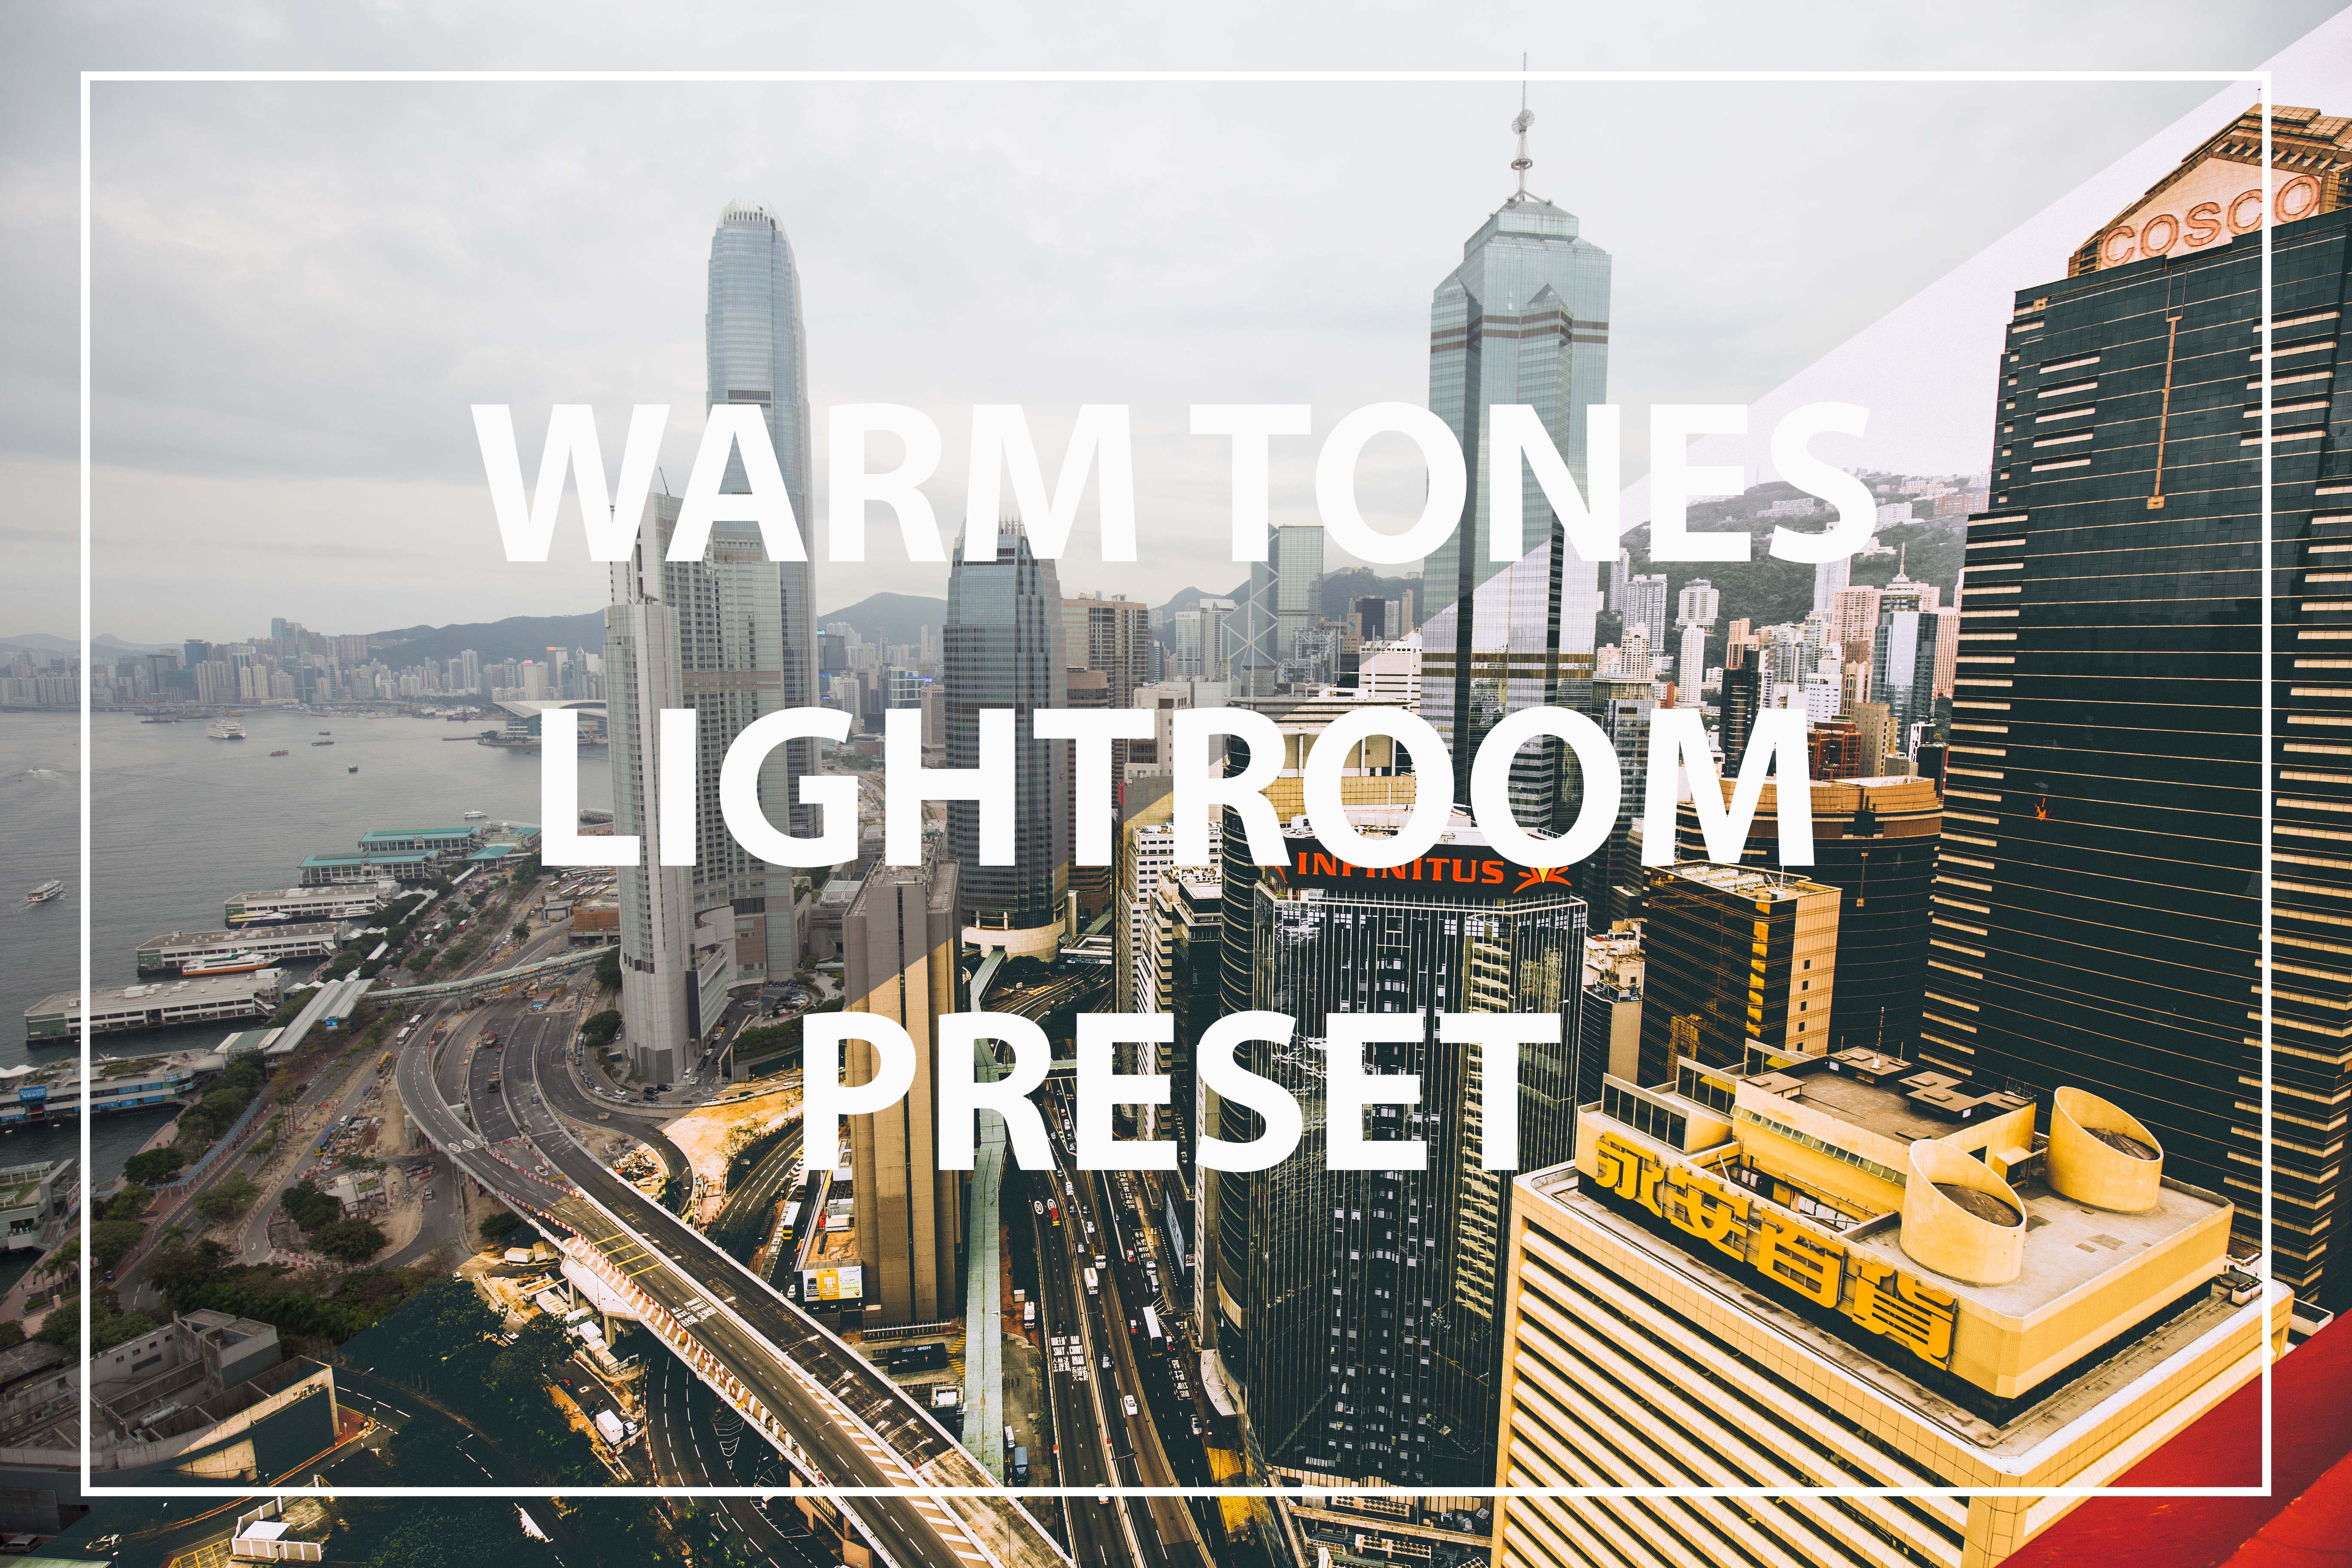 Warm Tones Lightroom Presetcover image.